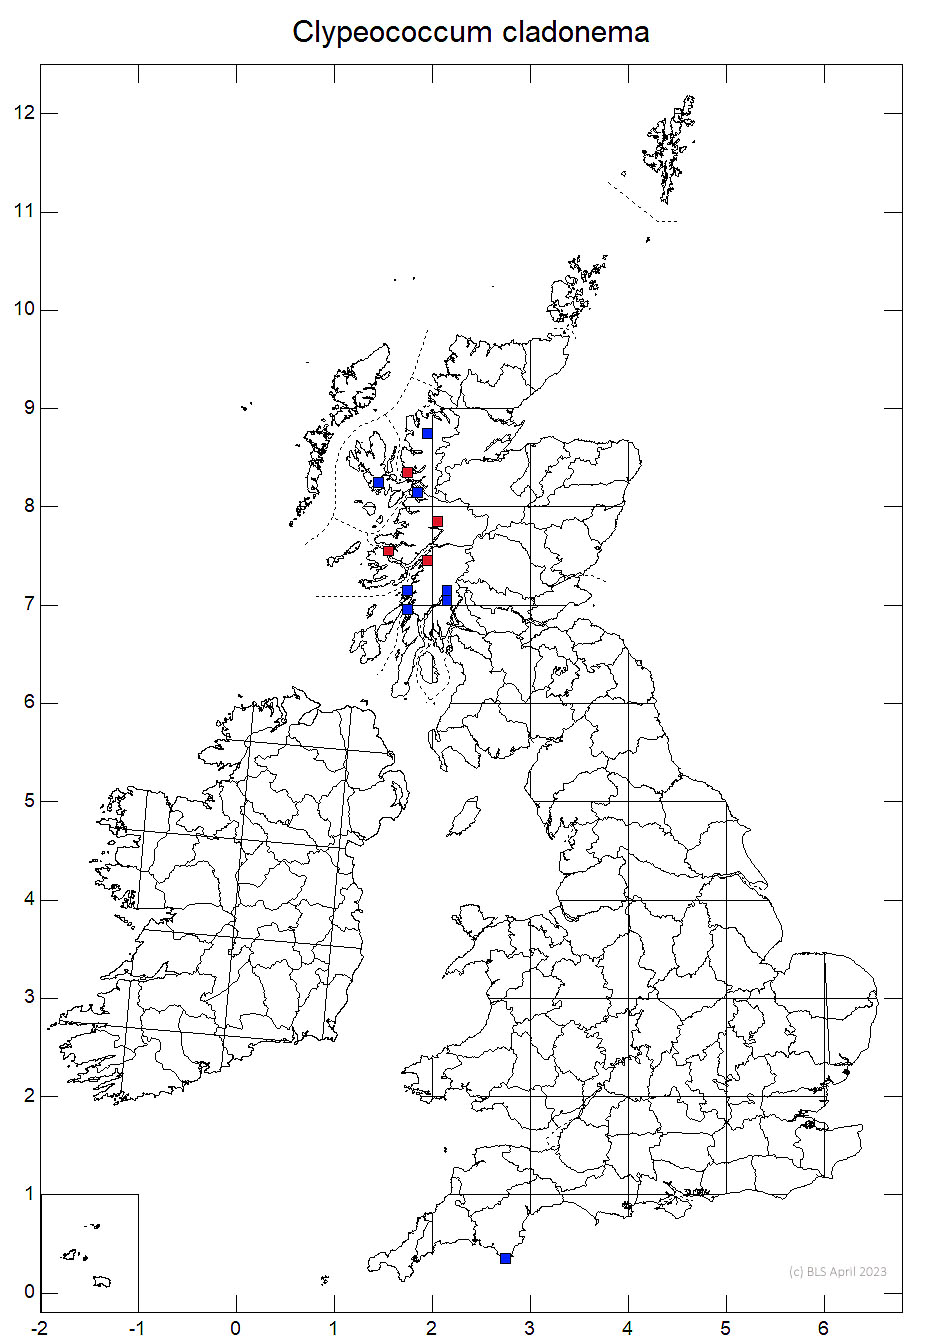 Clypeococcum cladonema 10km sq distribution map